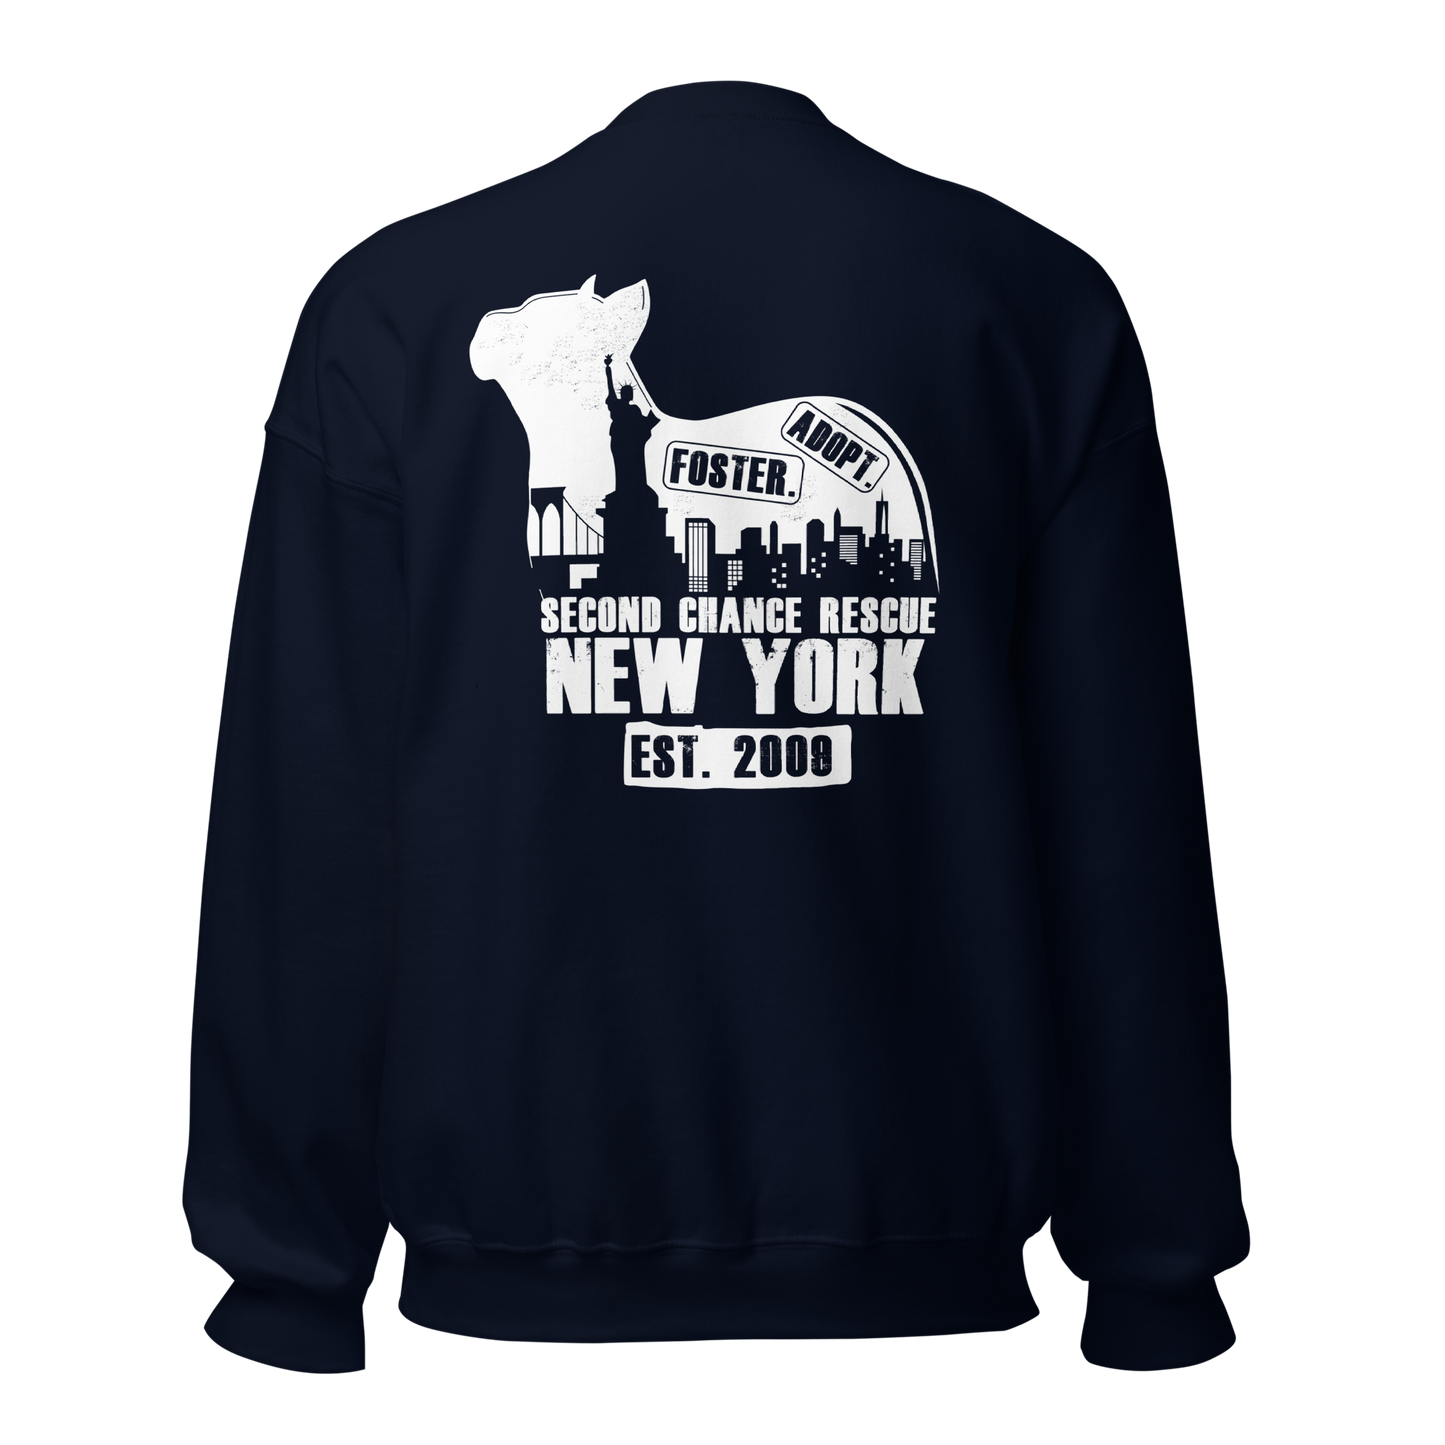 Rescued is My Favorite Breed/Manhattan – Unisex Sweatshirt